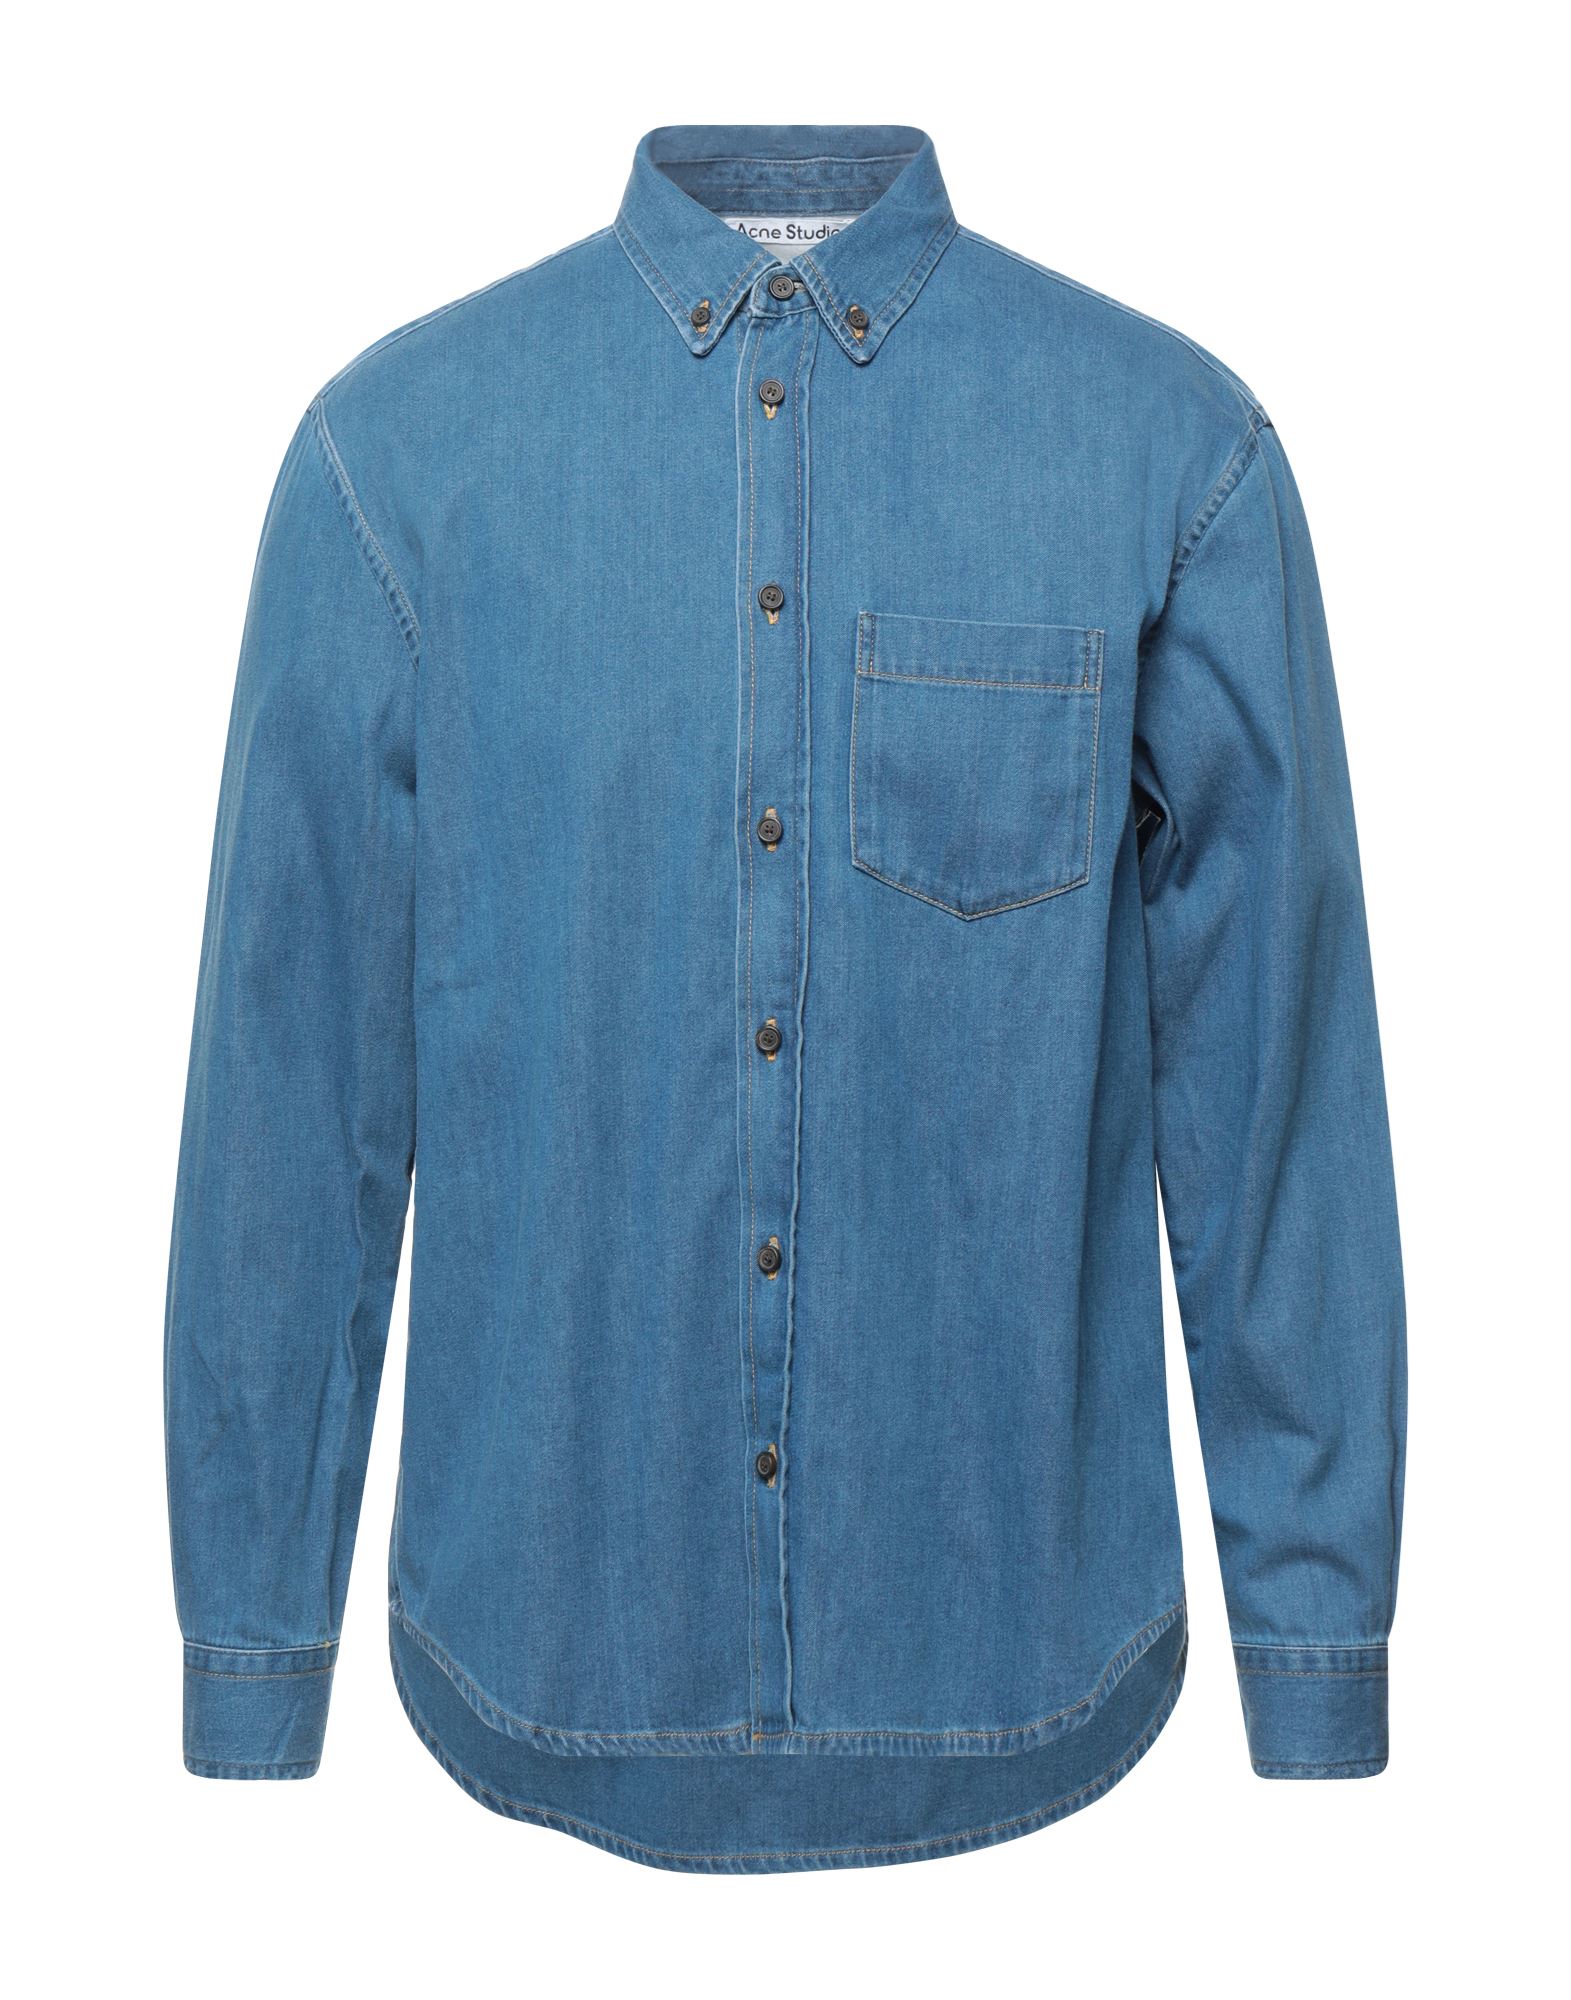 Acne Studios Denim Shirts In Blue | ModeSens